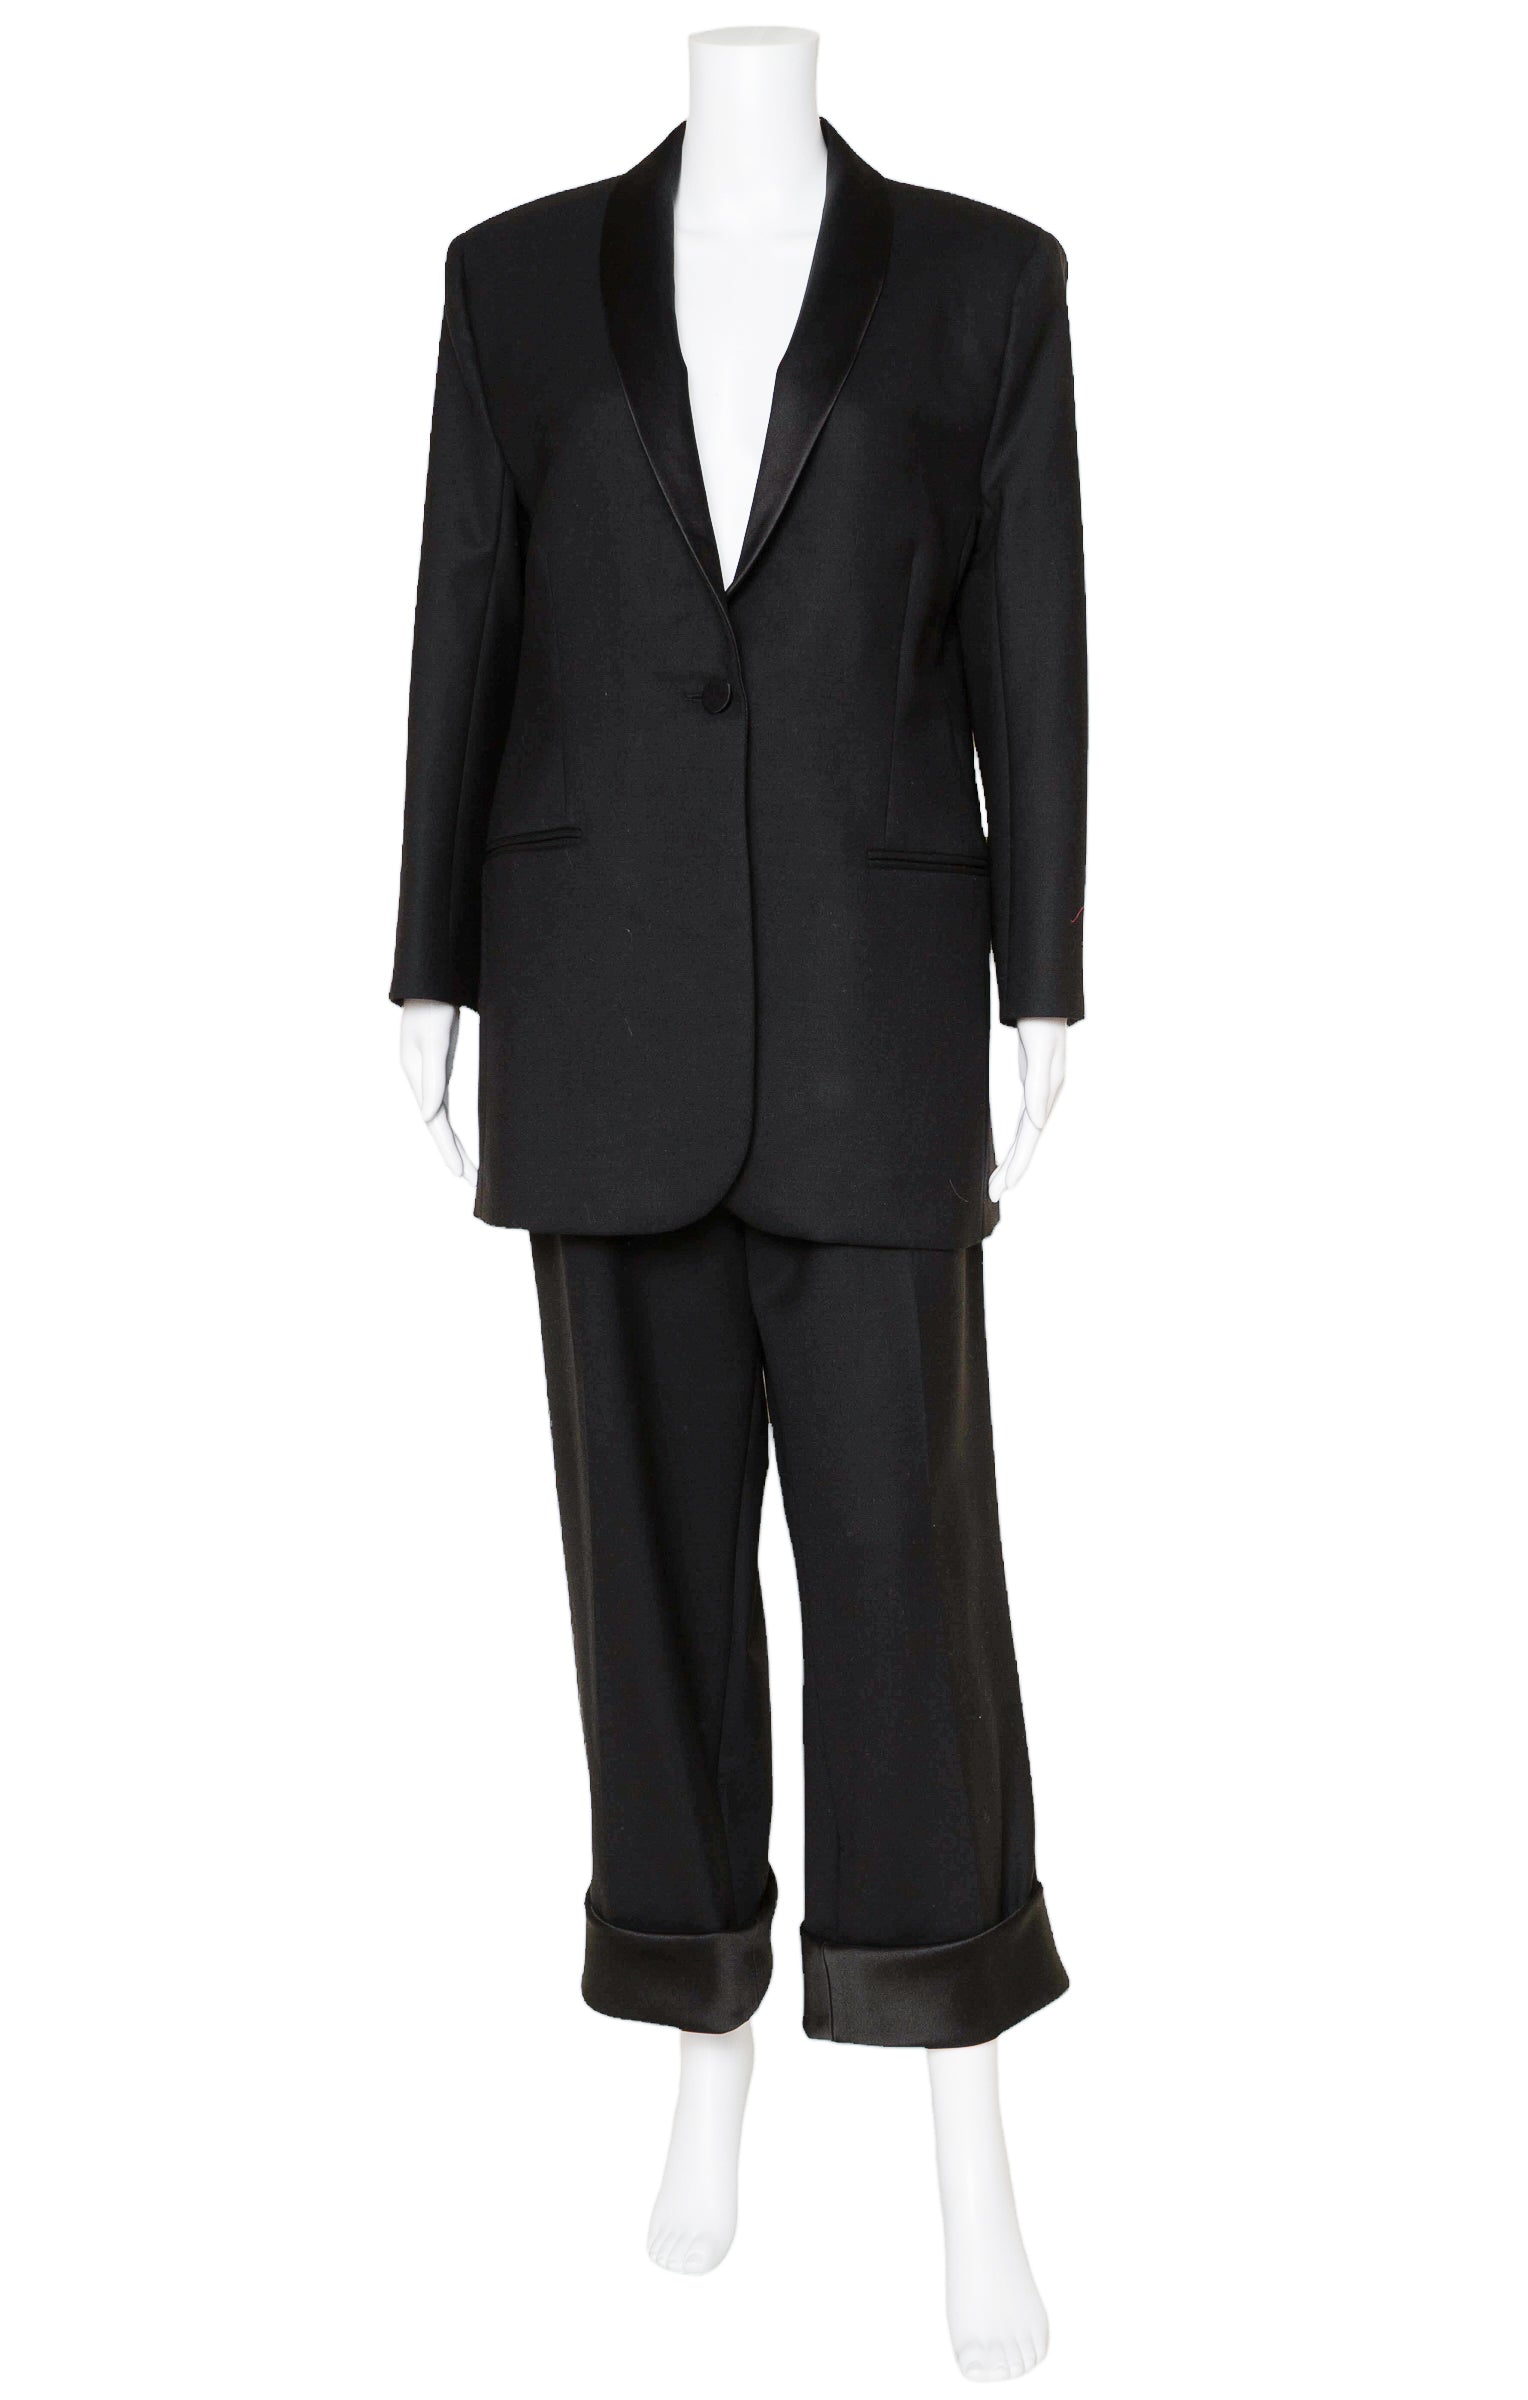 THE ROW (RARE) 3-Piece Suit Size: Jacket - US 14 Pants - US 8 Scarf - 66" x 36.5"